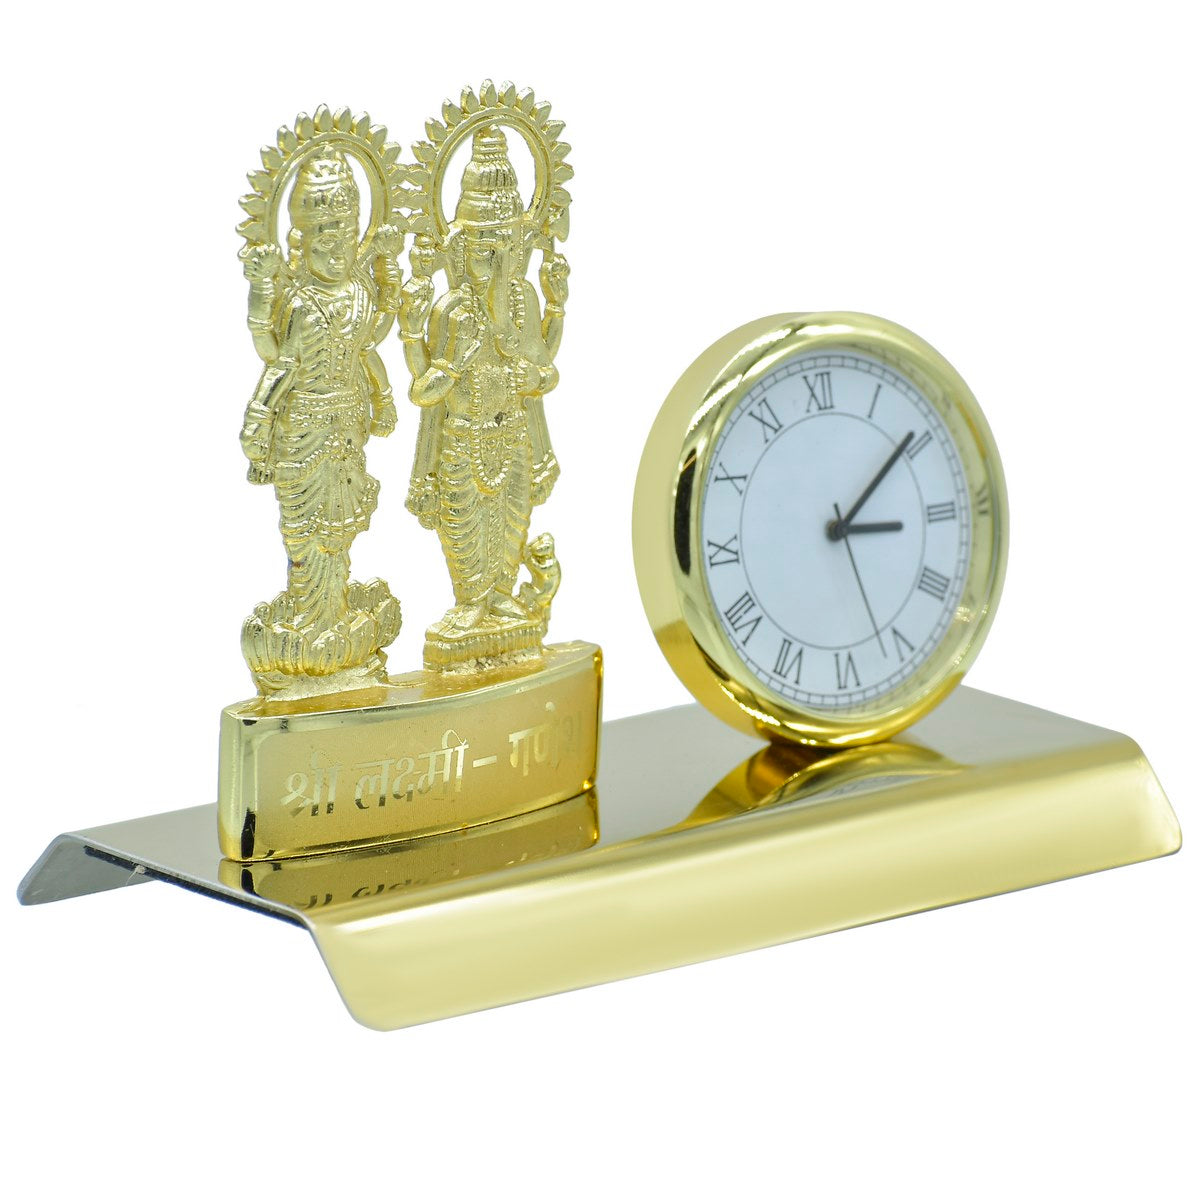 Desktop Golden Shri Laxmi Ganesh With Clock - For Corporate Gifting, Diwali Gifting for Employees, Dealers, Stakeholders, Customers JATT658